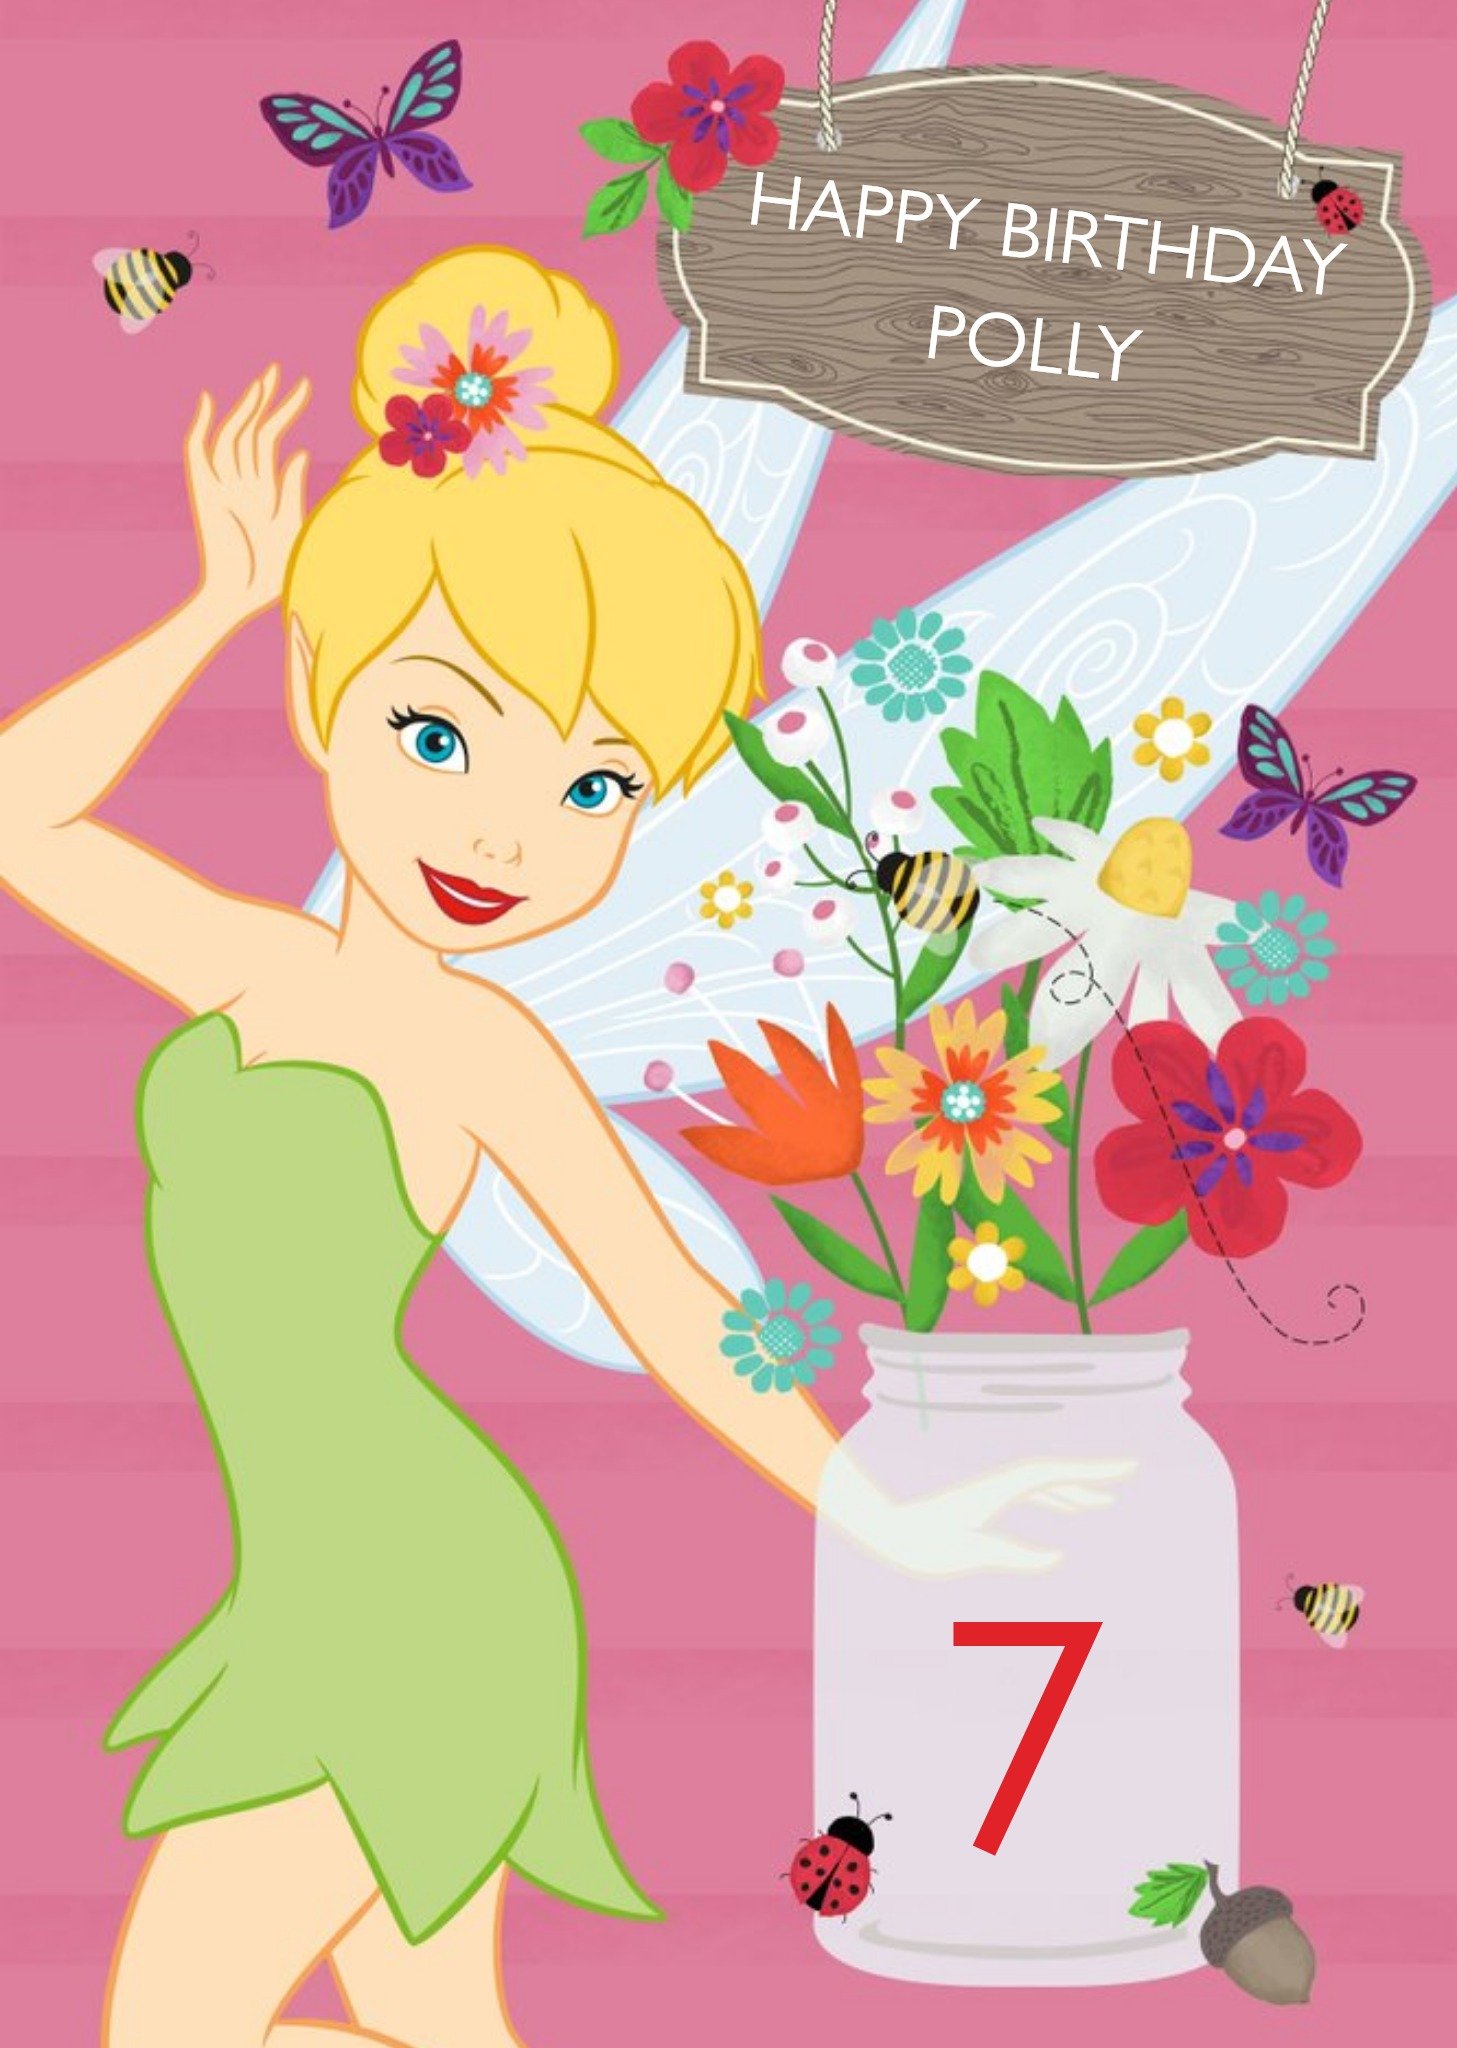 Disney Tinkerbell And Jar Of Flowers Personalised Happy Birthday Card Ecard